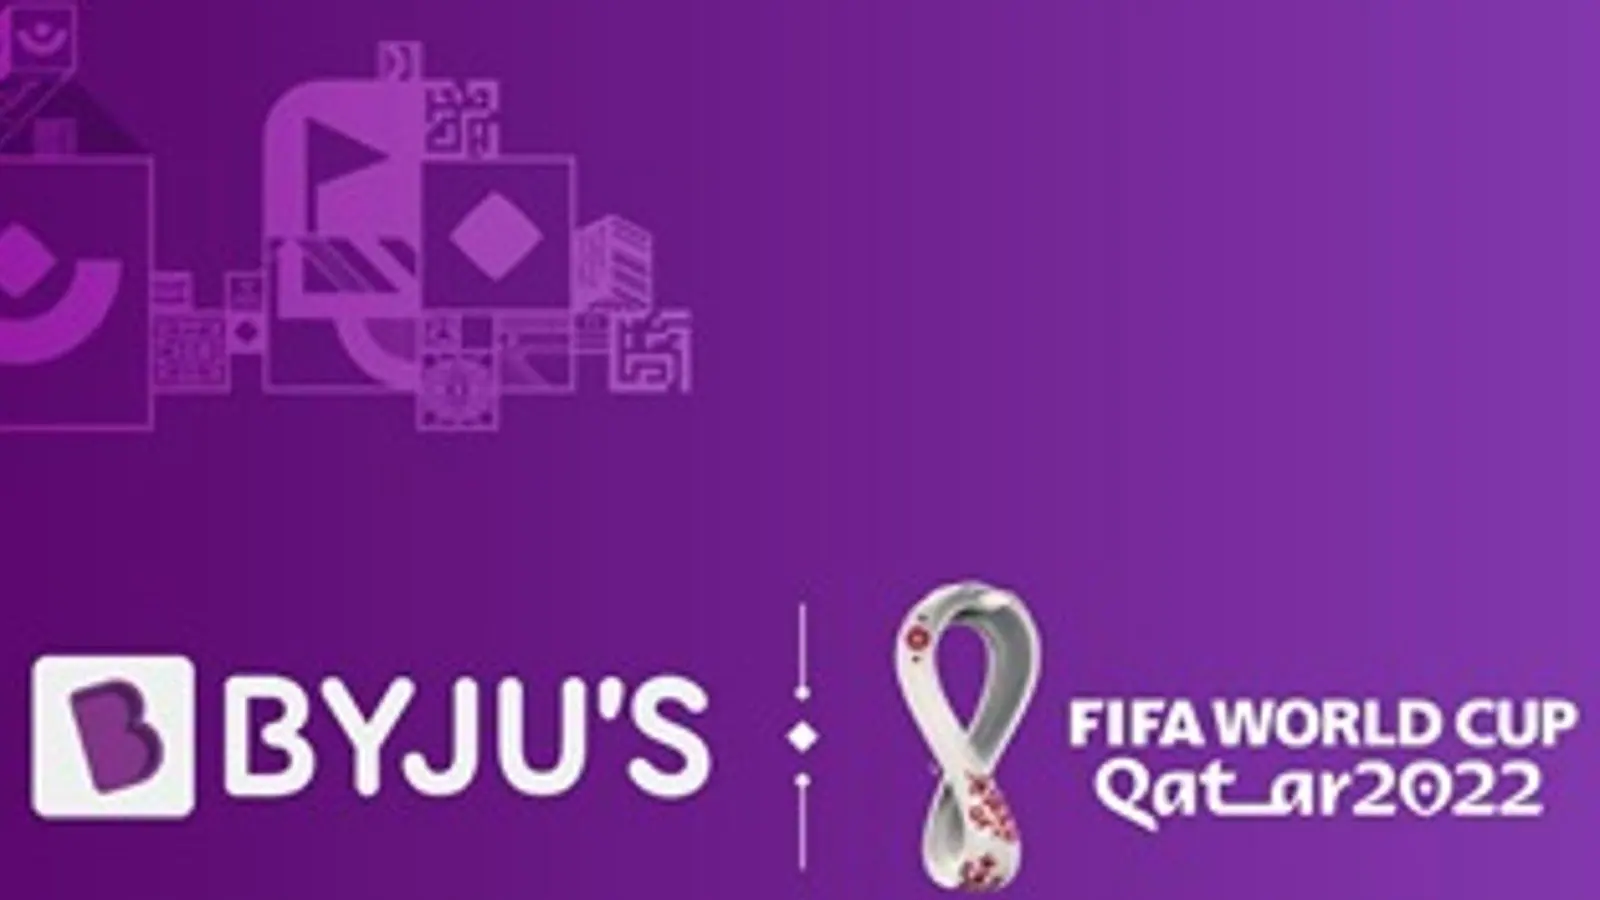 BYJU'S named as official sponsor of FIFA World Cup Qatar 2022 BYJU'S ਨੂੰ FIFA ਵਿਸ਼ਵ ਕੱਪ ਕਤਰ 2022 ਦੇ ਅਧਿਕਾਰਤ ਸਪਾਂਸਰ ਵਜੋਂ ਕੀਤਾ ਨਾਮਜ਼ਦ